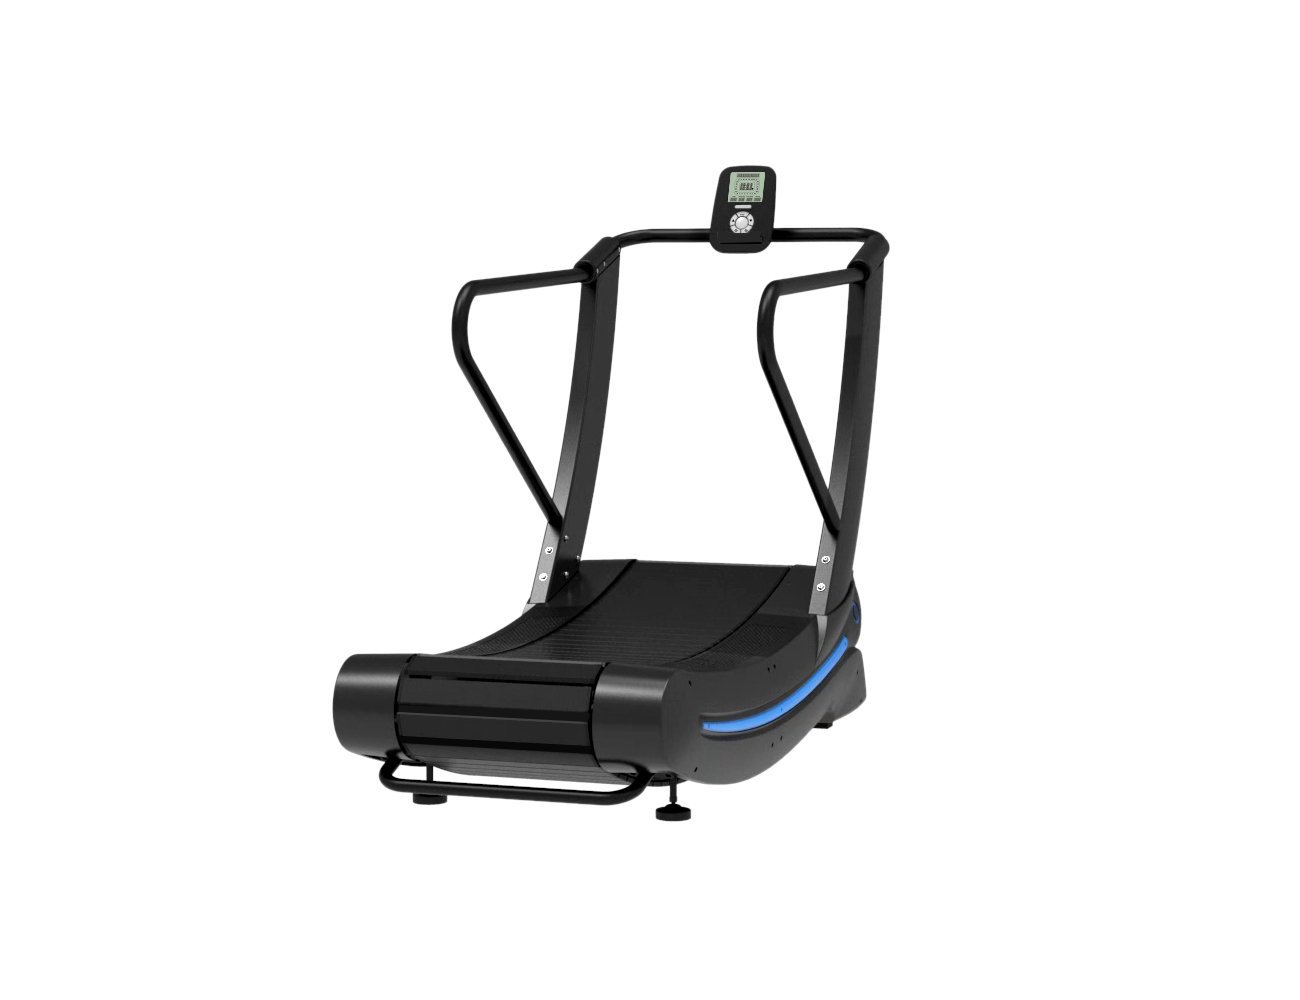 Keep TZ-3000C Curve Manual Treadmill @ Crazy Sales - We have the best